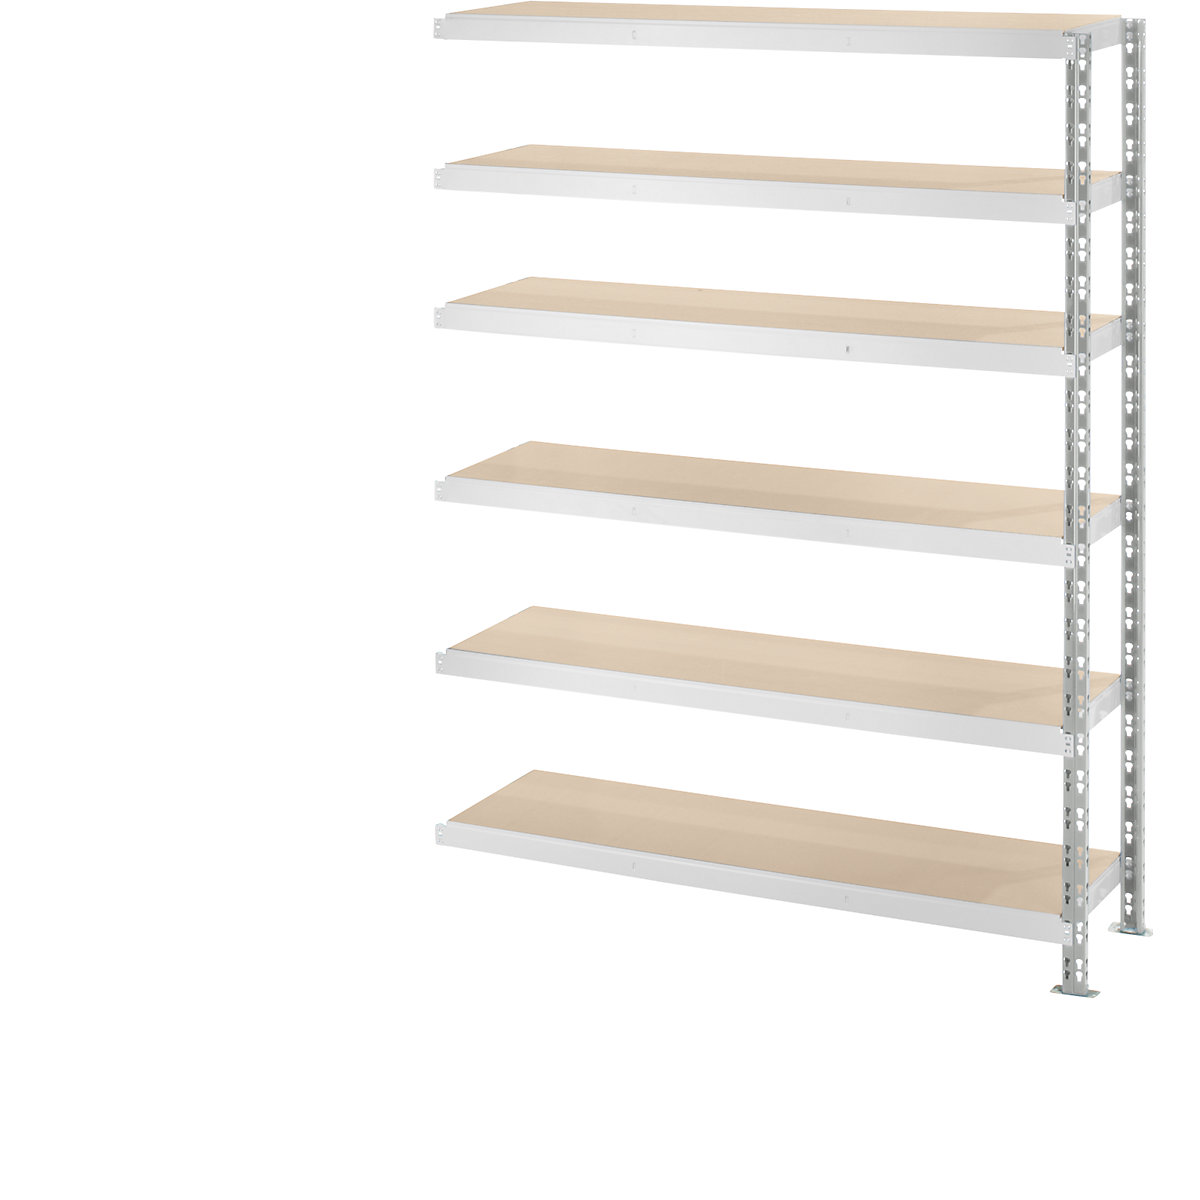 Wide span boltless shelf unit with moulded chipboard shelves, depth 500 mm, extension shelf unit, HxW 1976 x 1525 mm